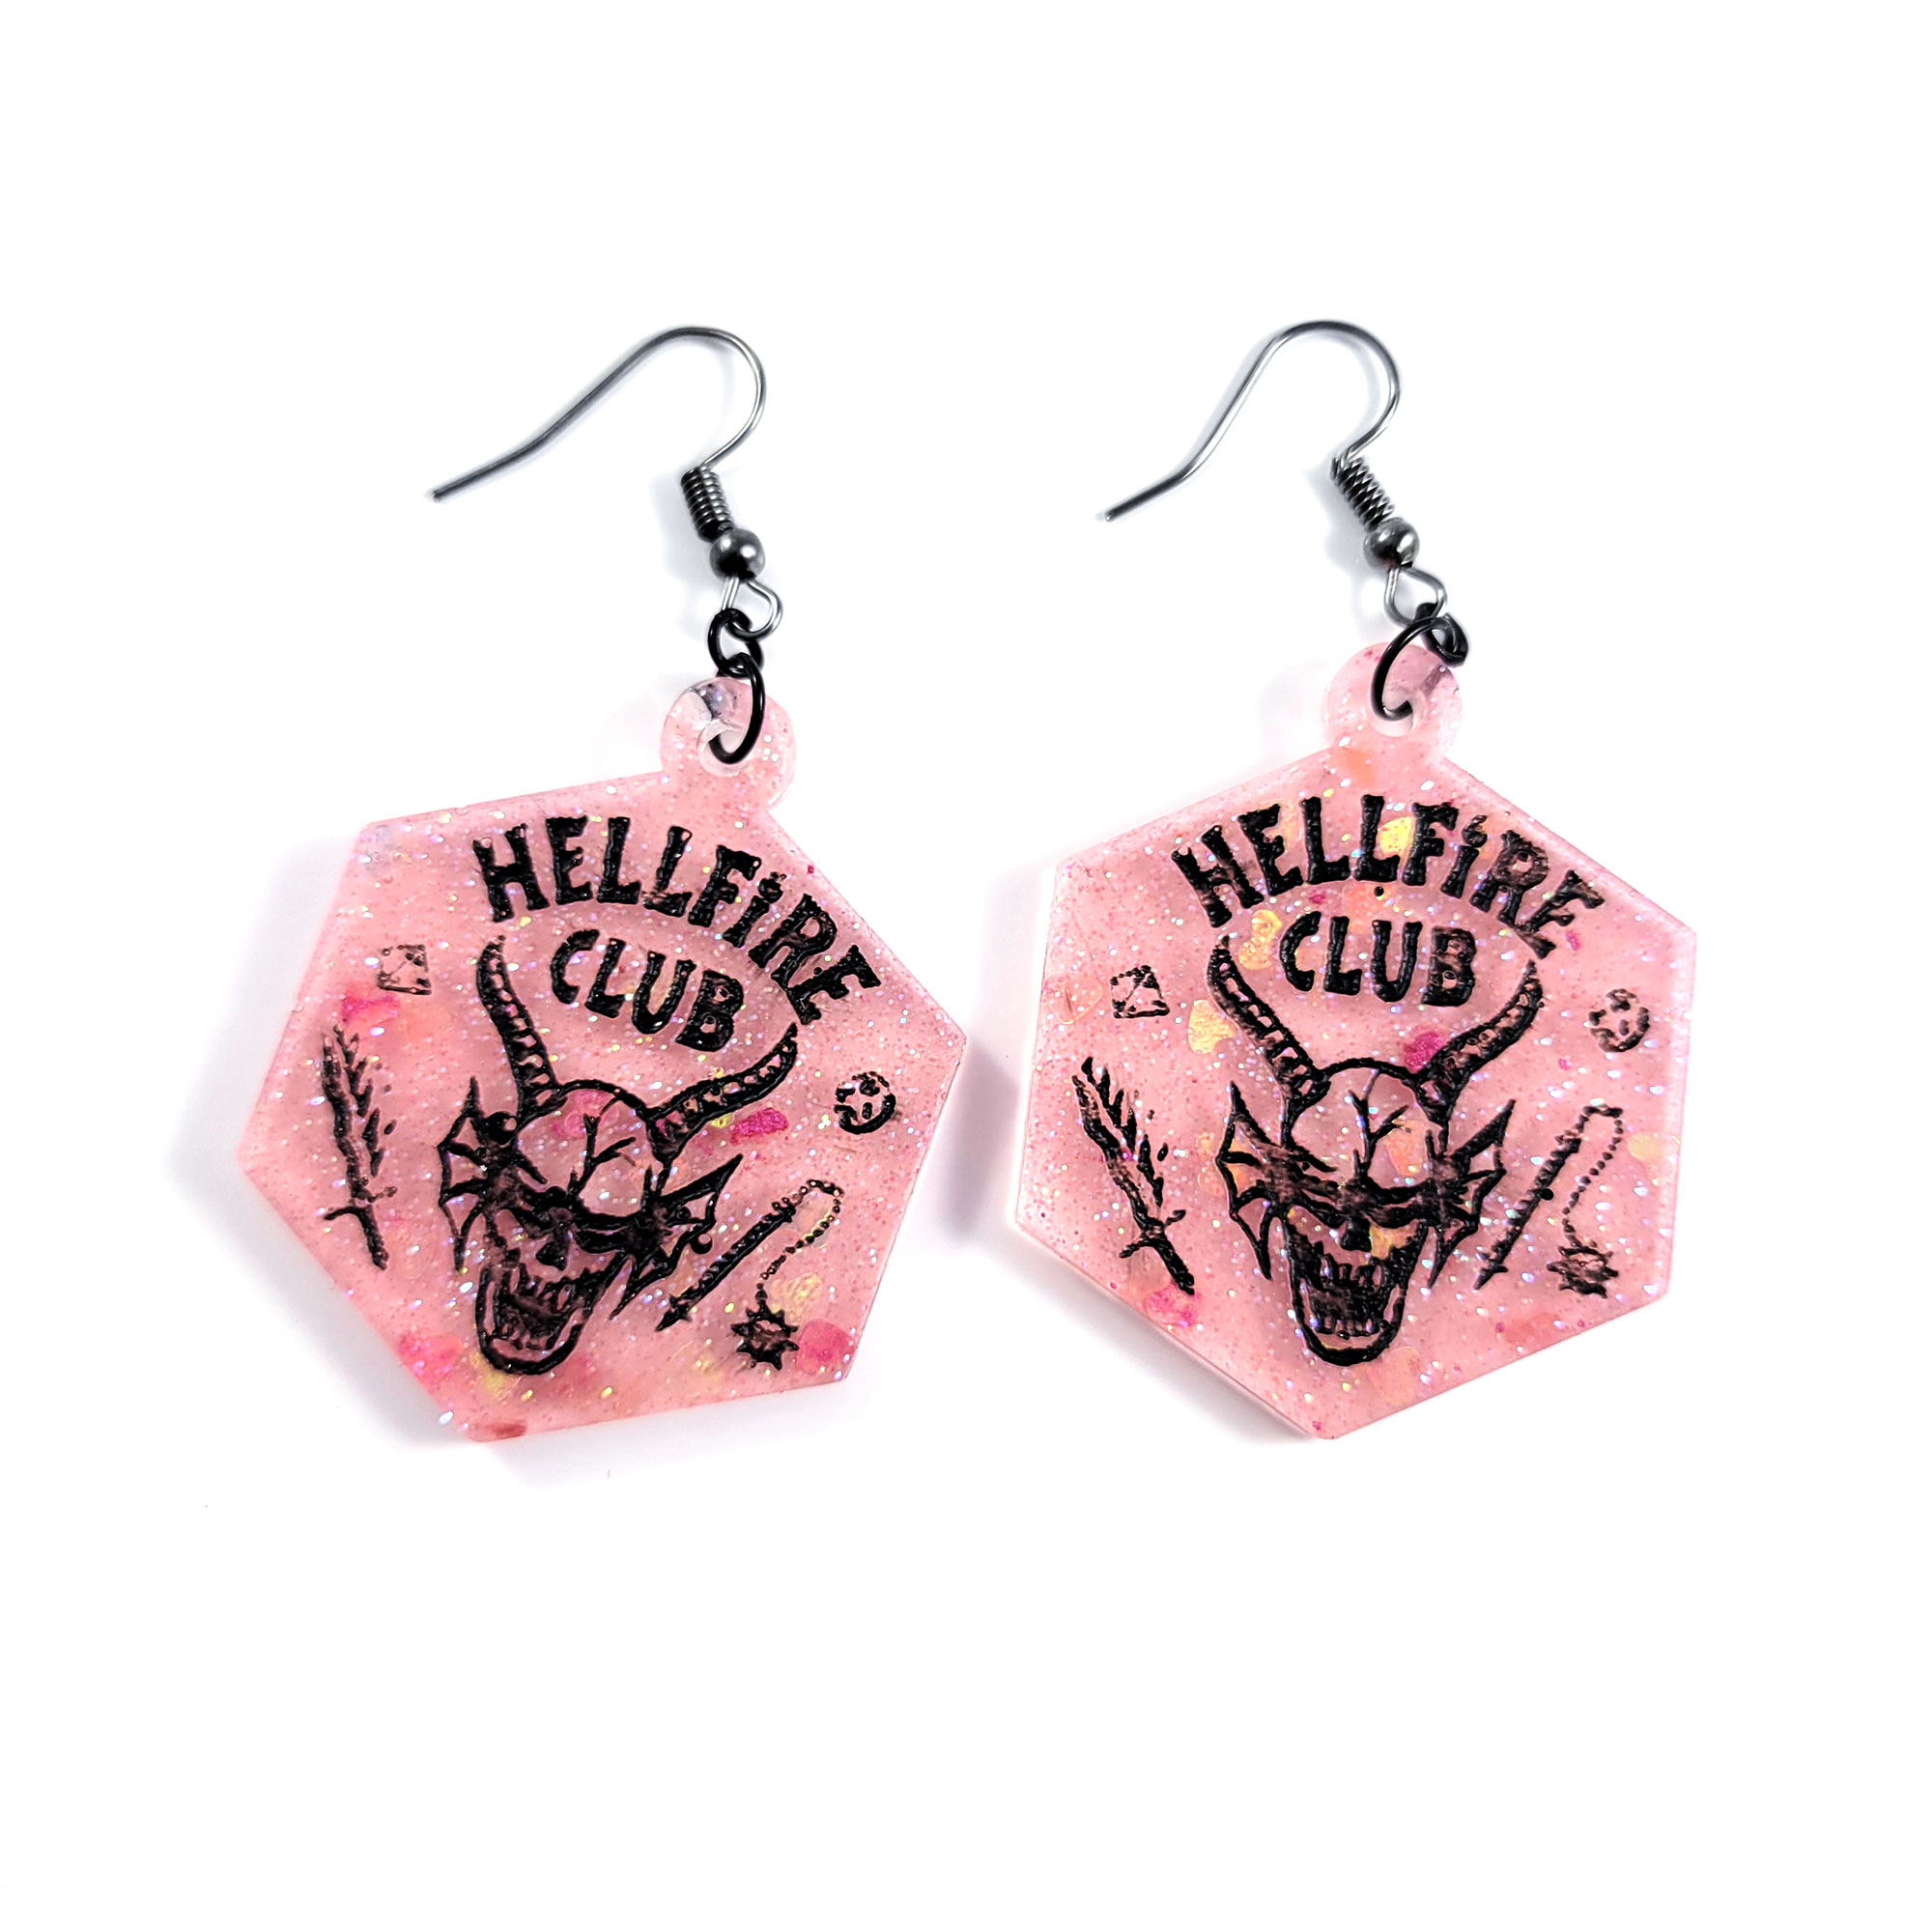 D&D Club Earrings by Wilde Designs